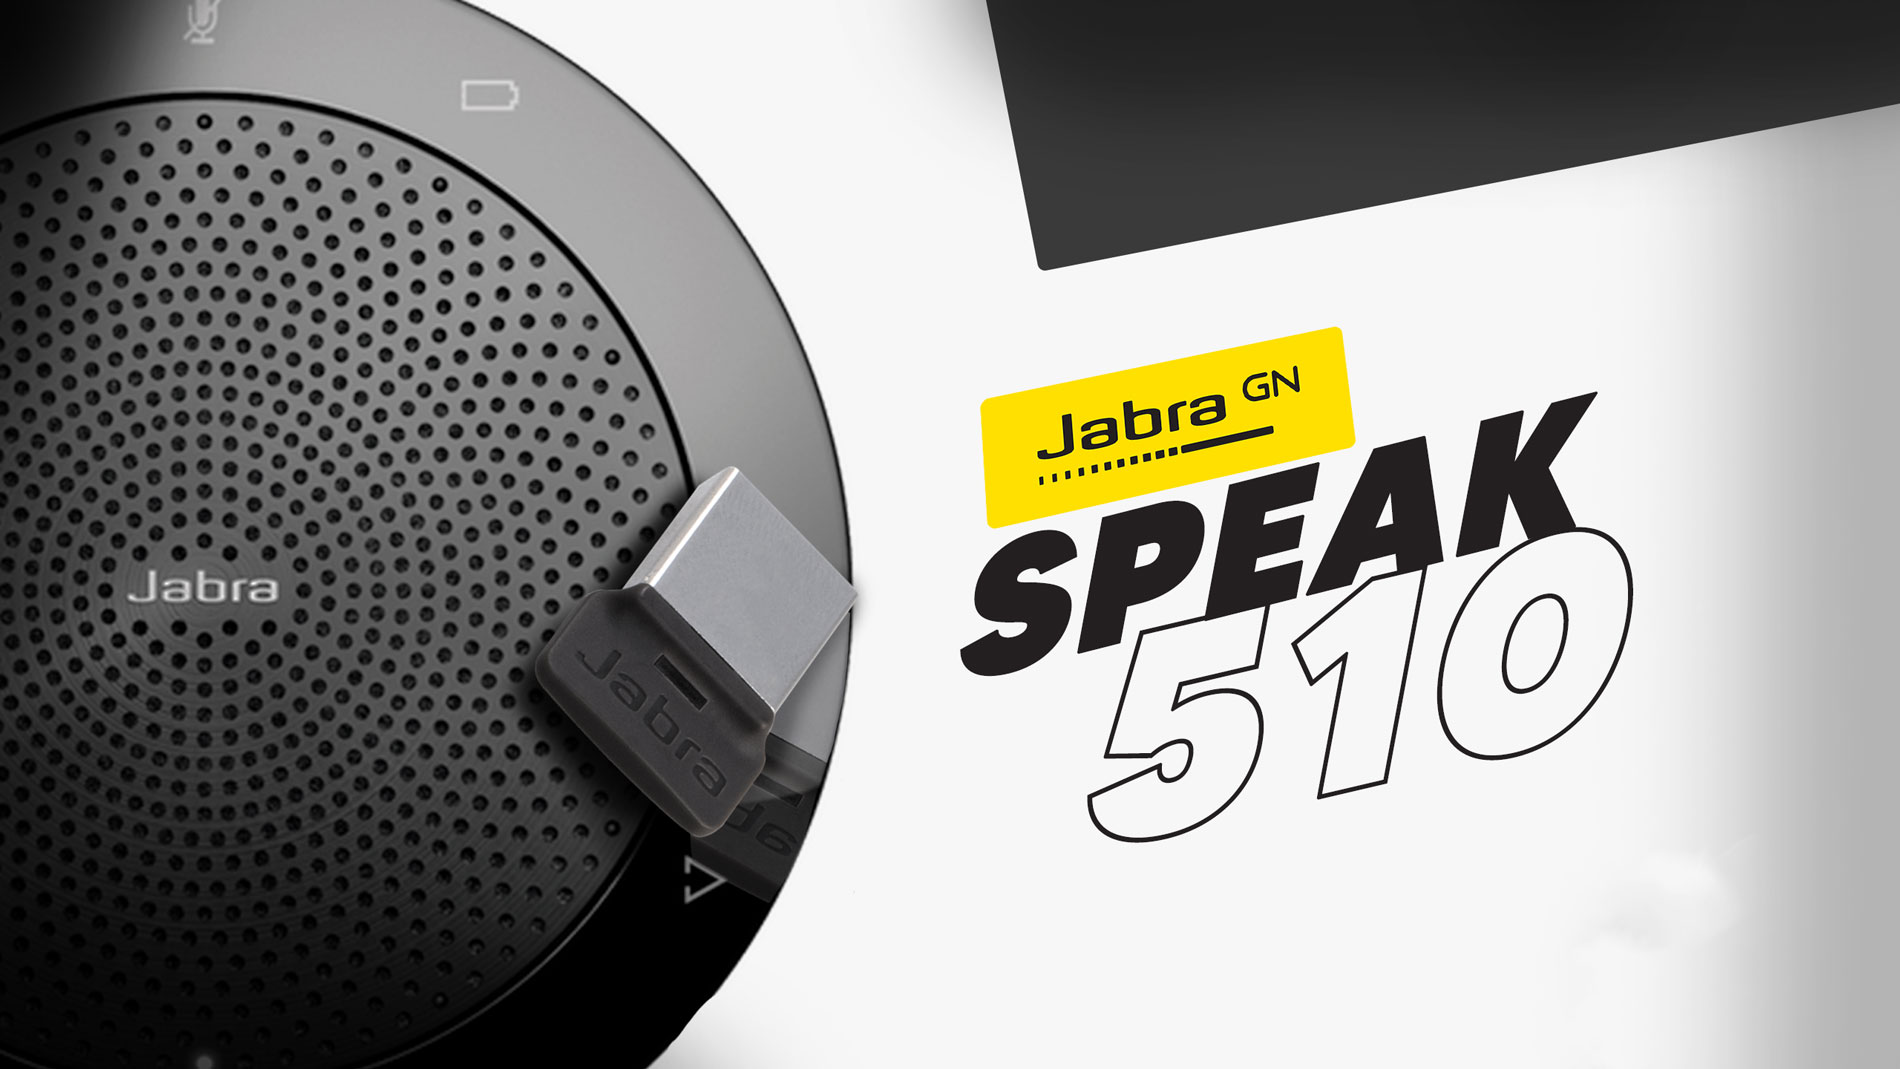 Jabra Speak 510 | Speakerphone Overview - Call One, Inc